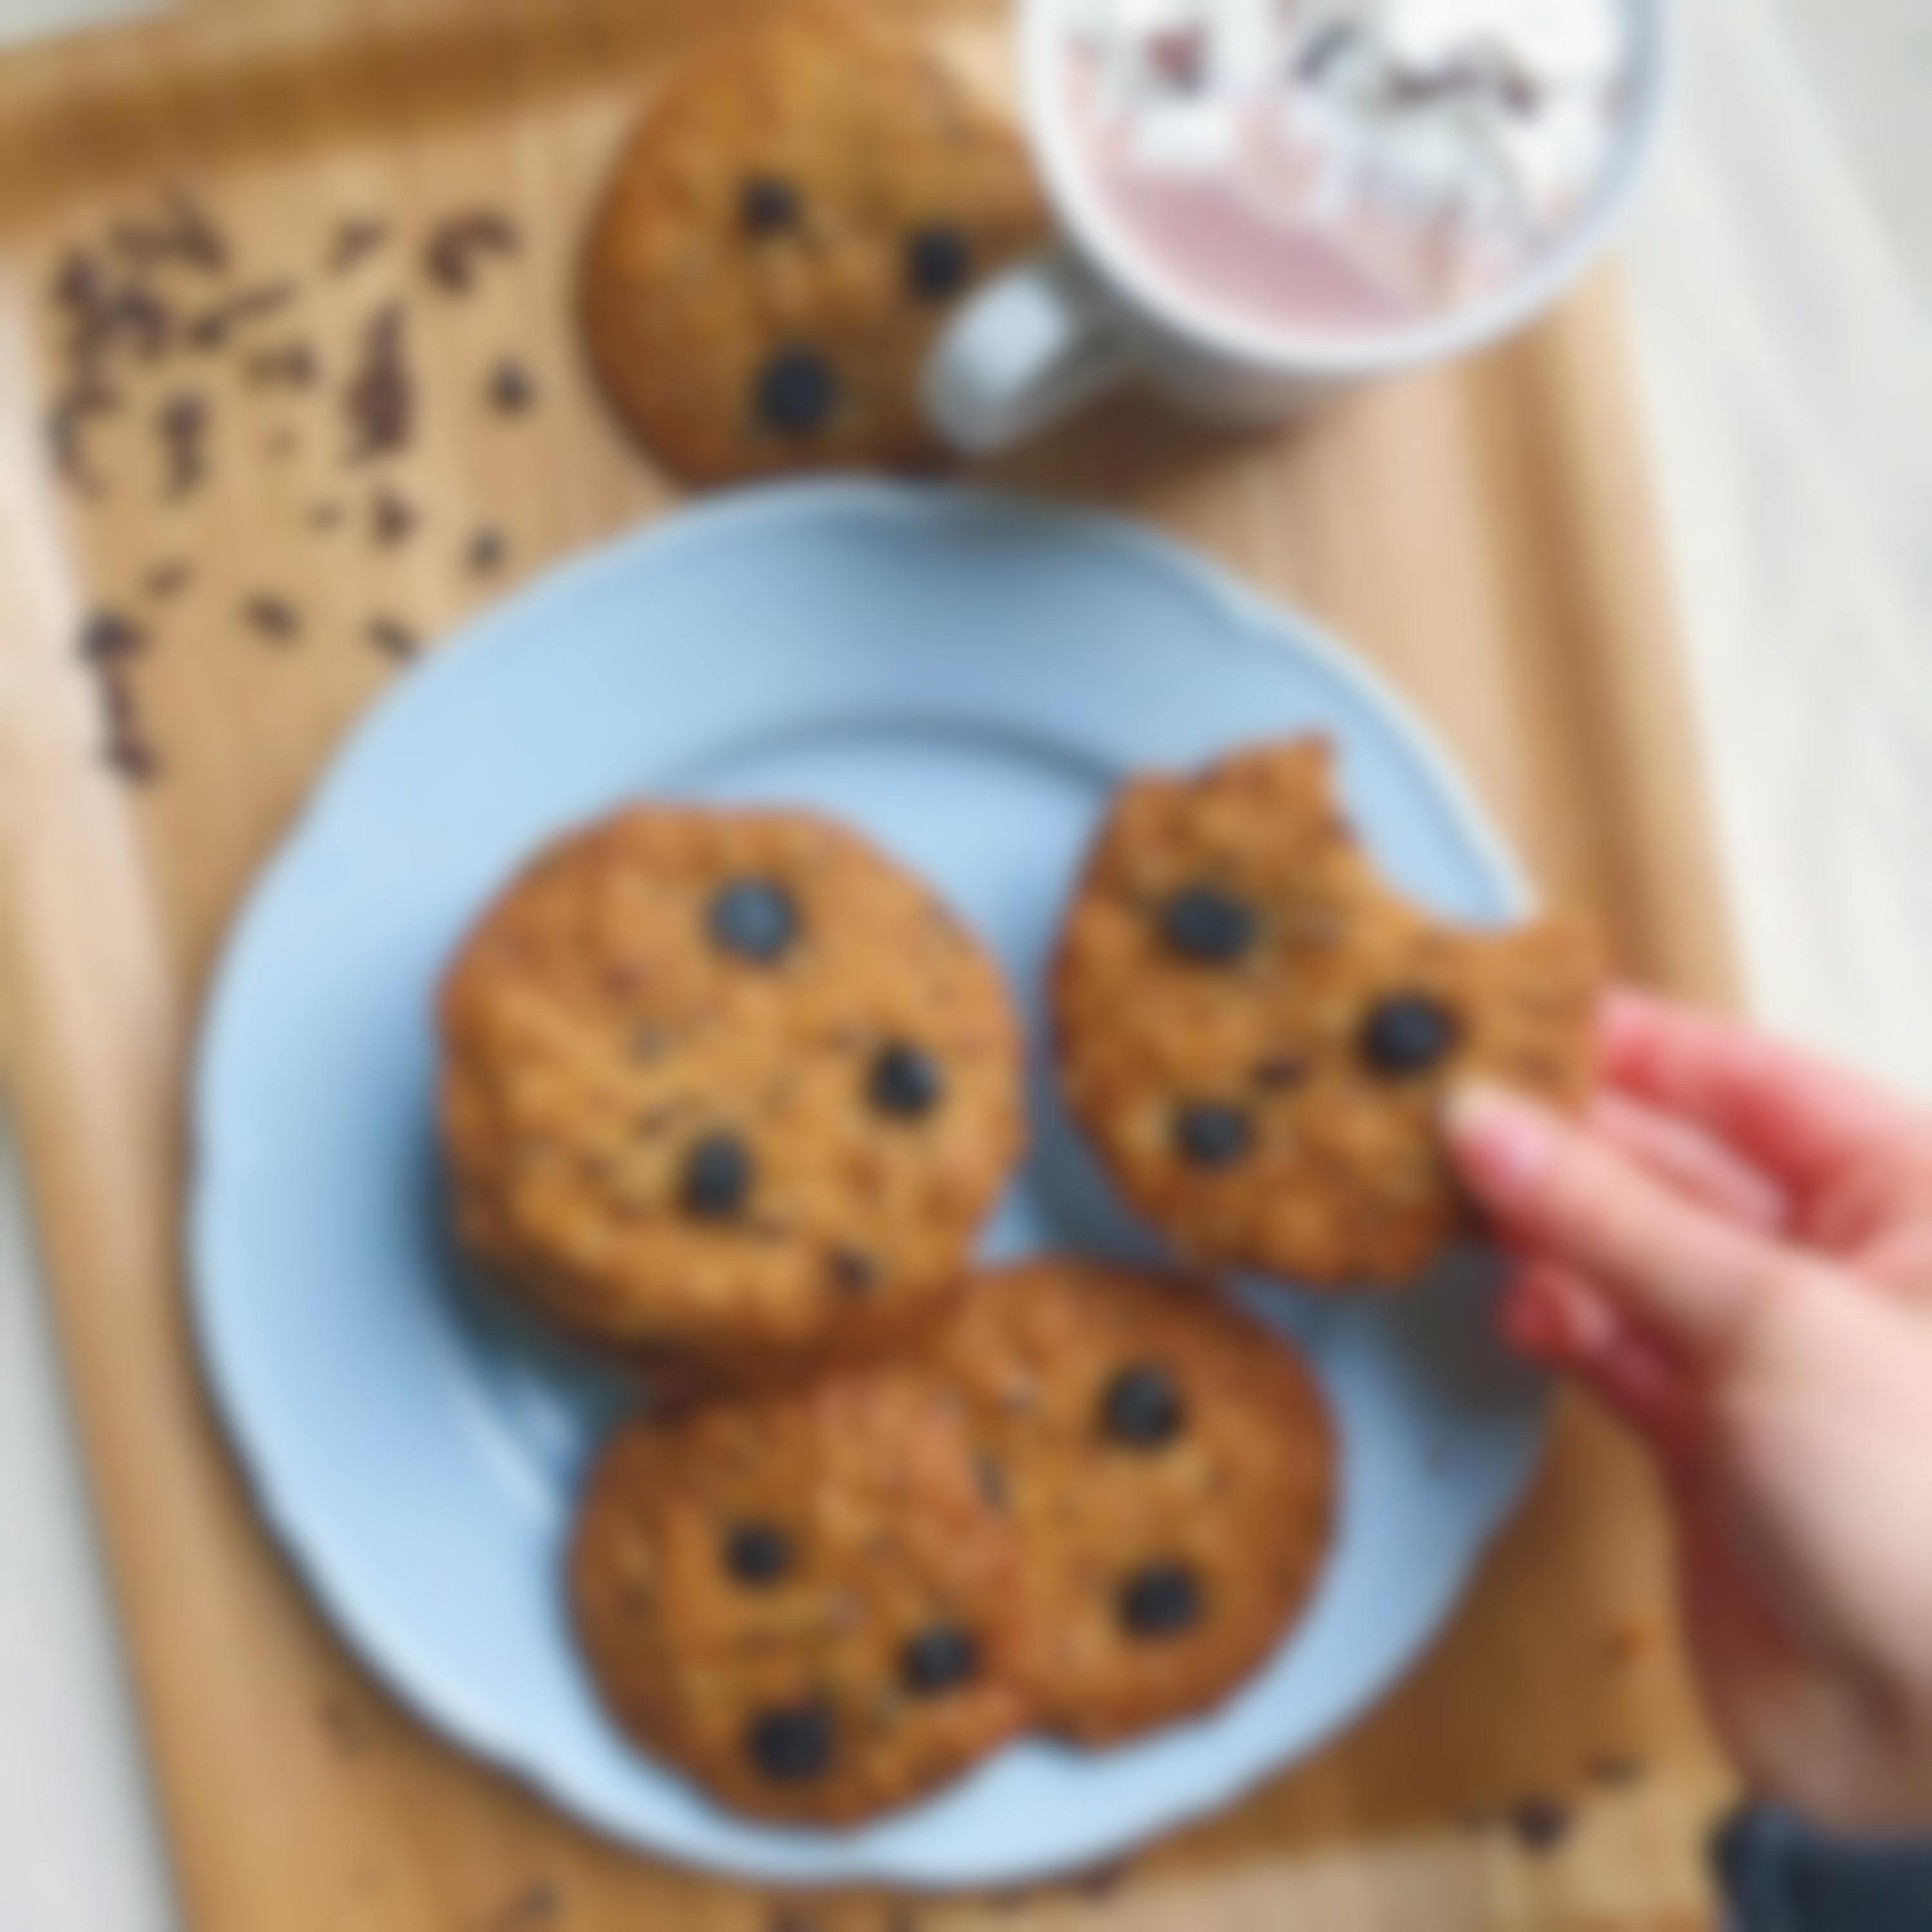 Vegan cookies with blueberries